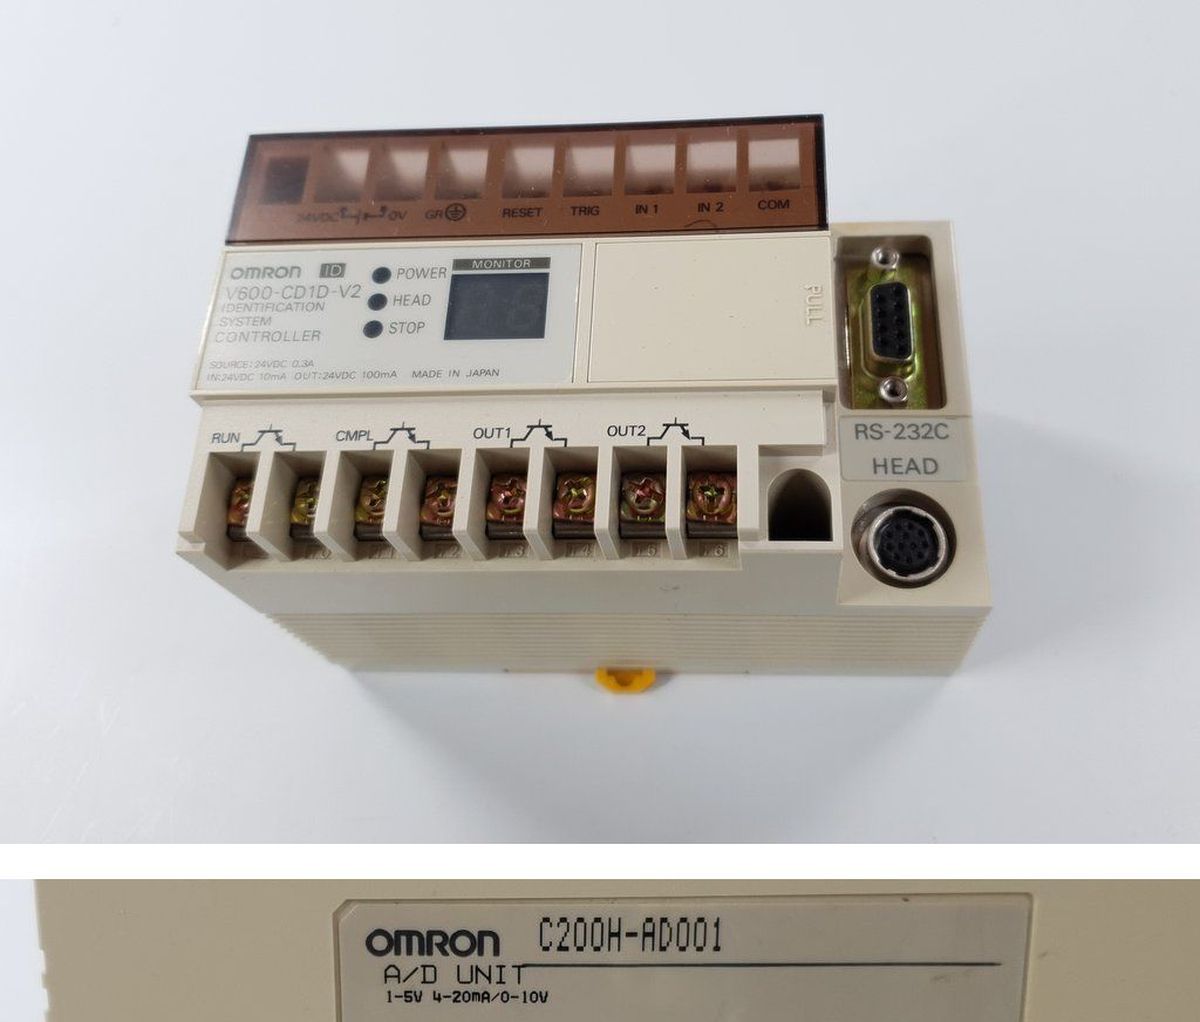 PP9322 A/D Unit Omron C200H-AD001